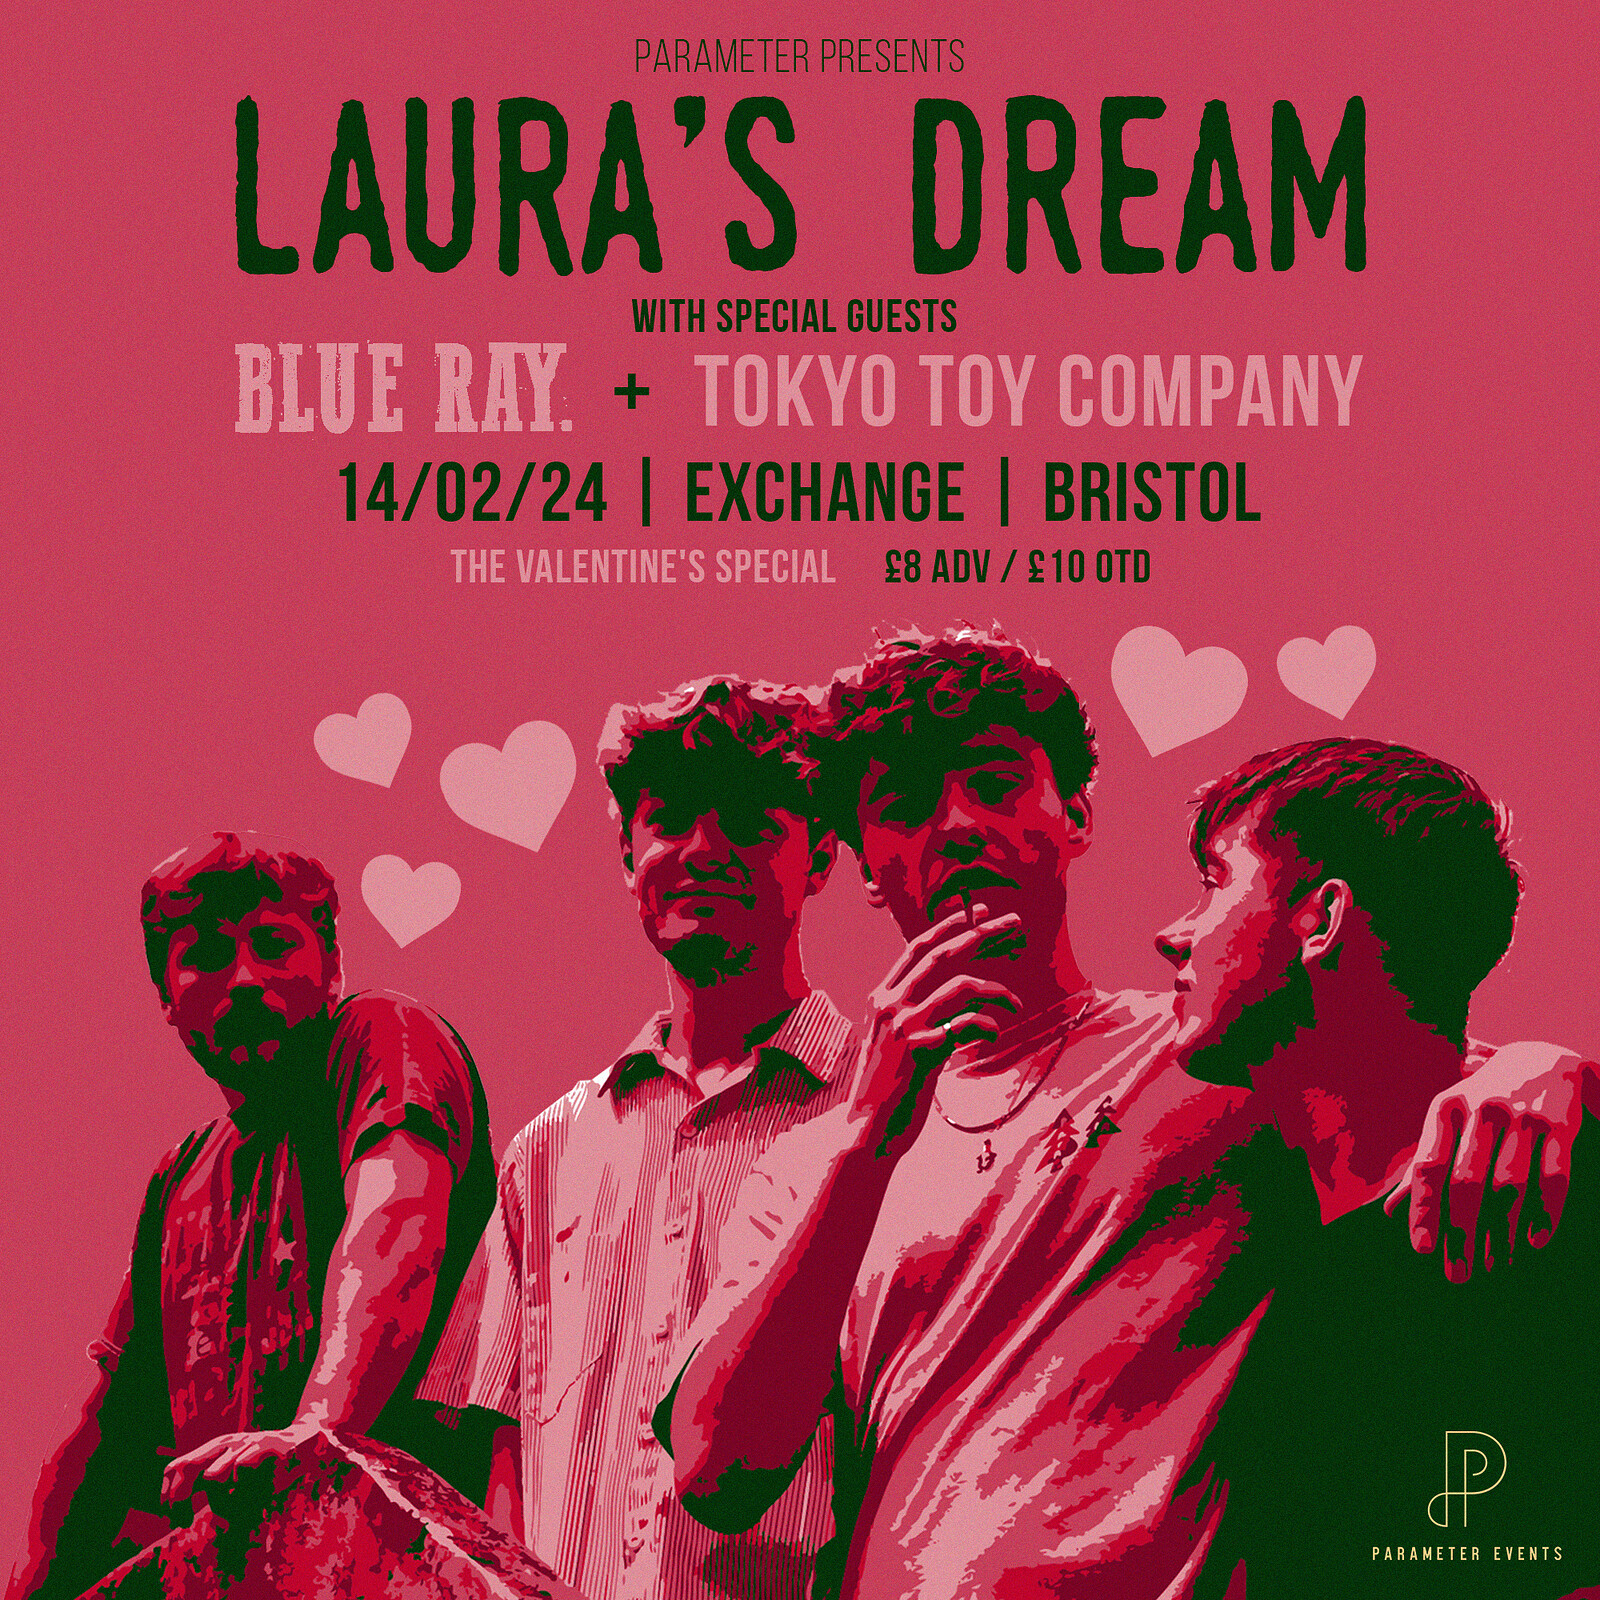 Laura's Dream at Exchange